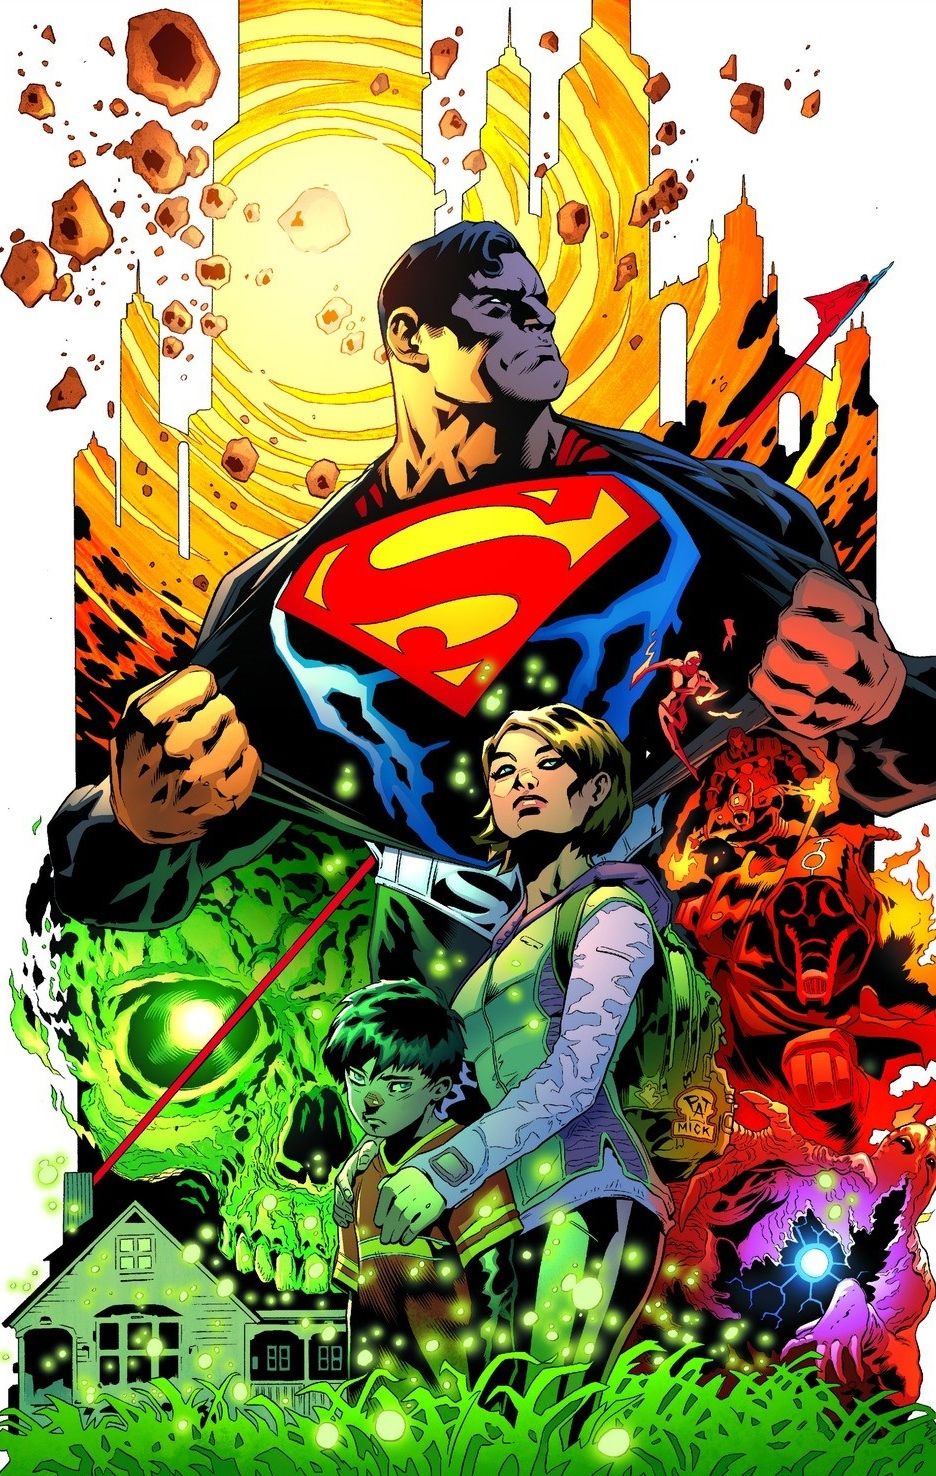 Superman Issue 1 Rebirth